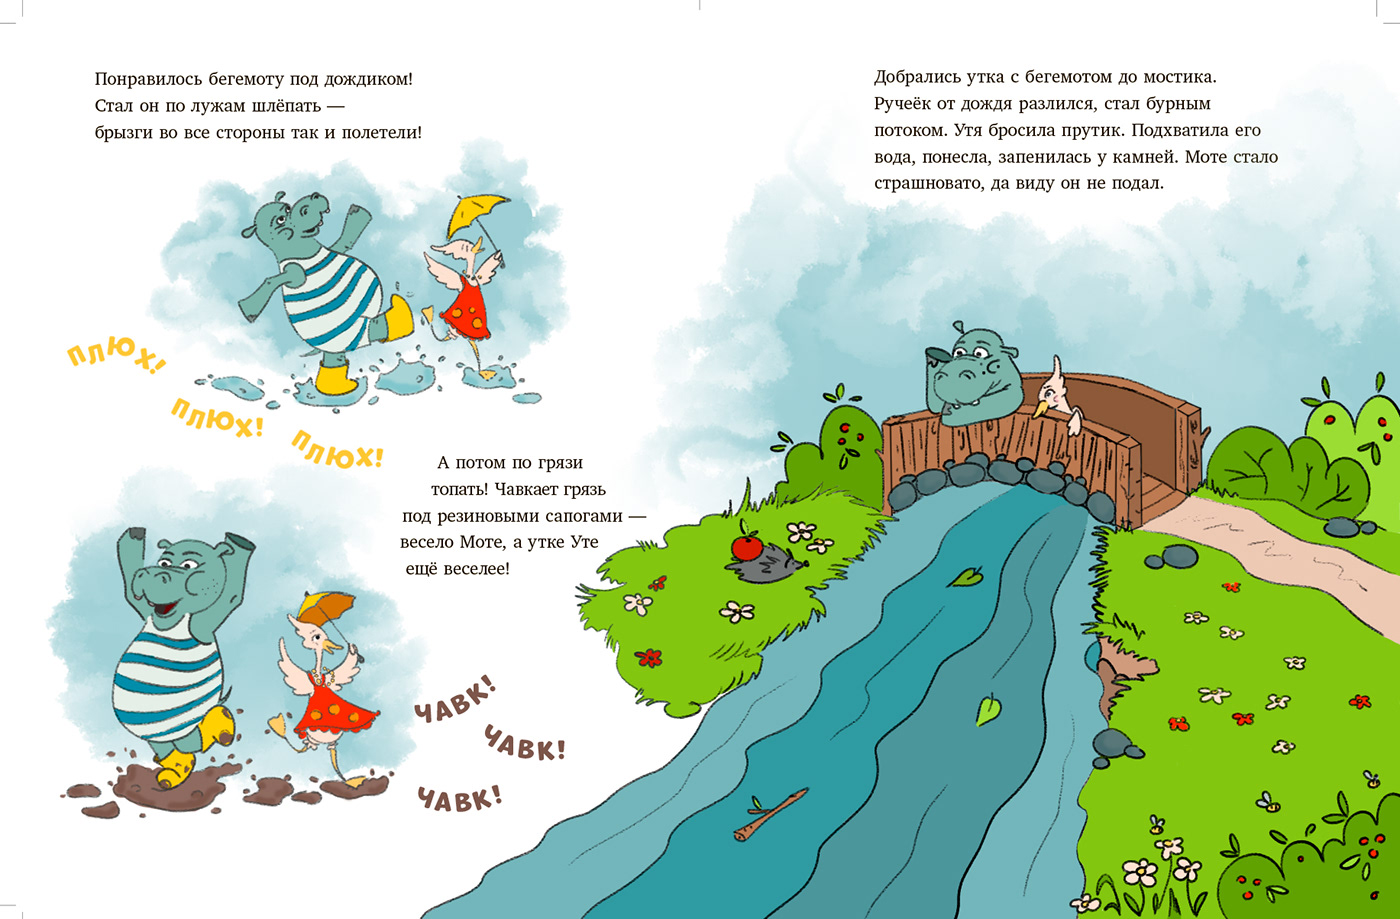 Character children illustration children's book детская иллюстрация для детей иллюстрация книжная иллюстрация персонаж утя и мотя характер